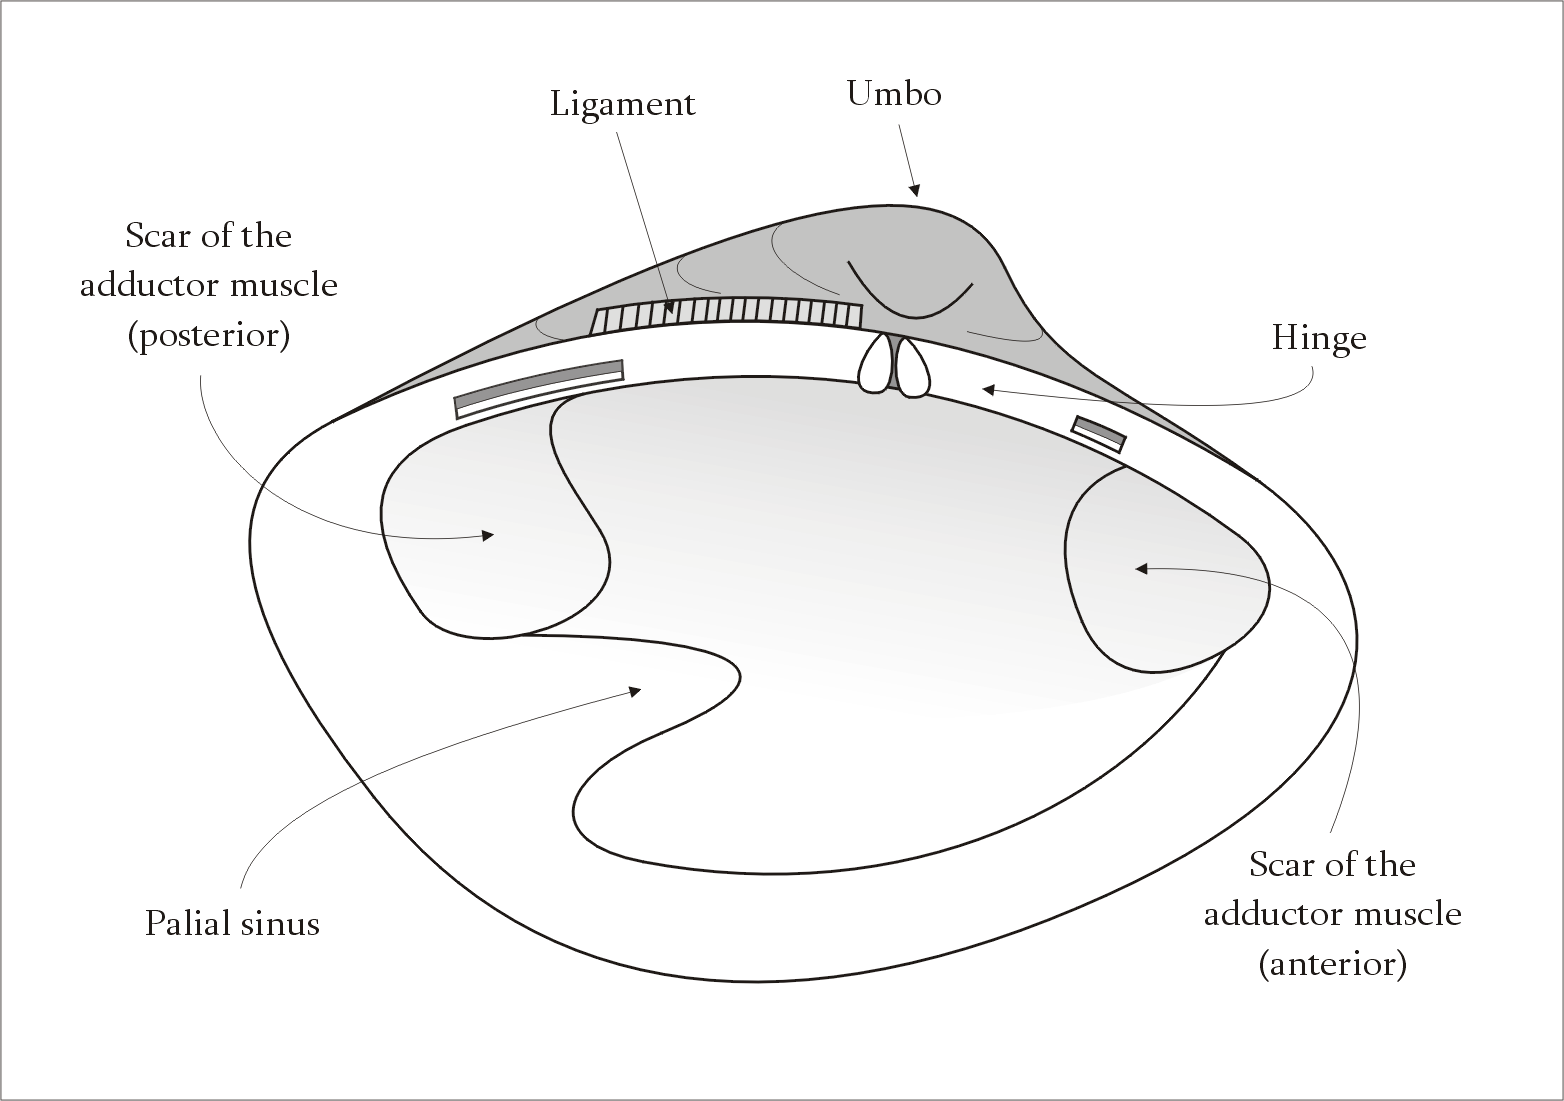 bivalve mollusk diagram